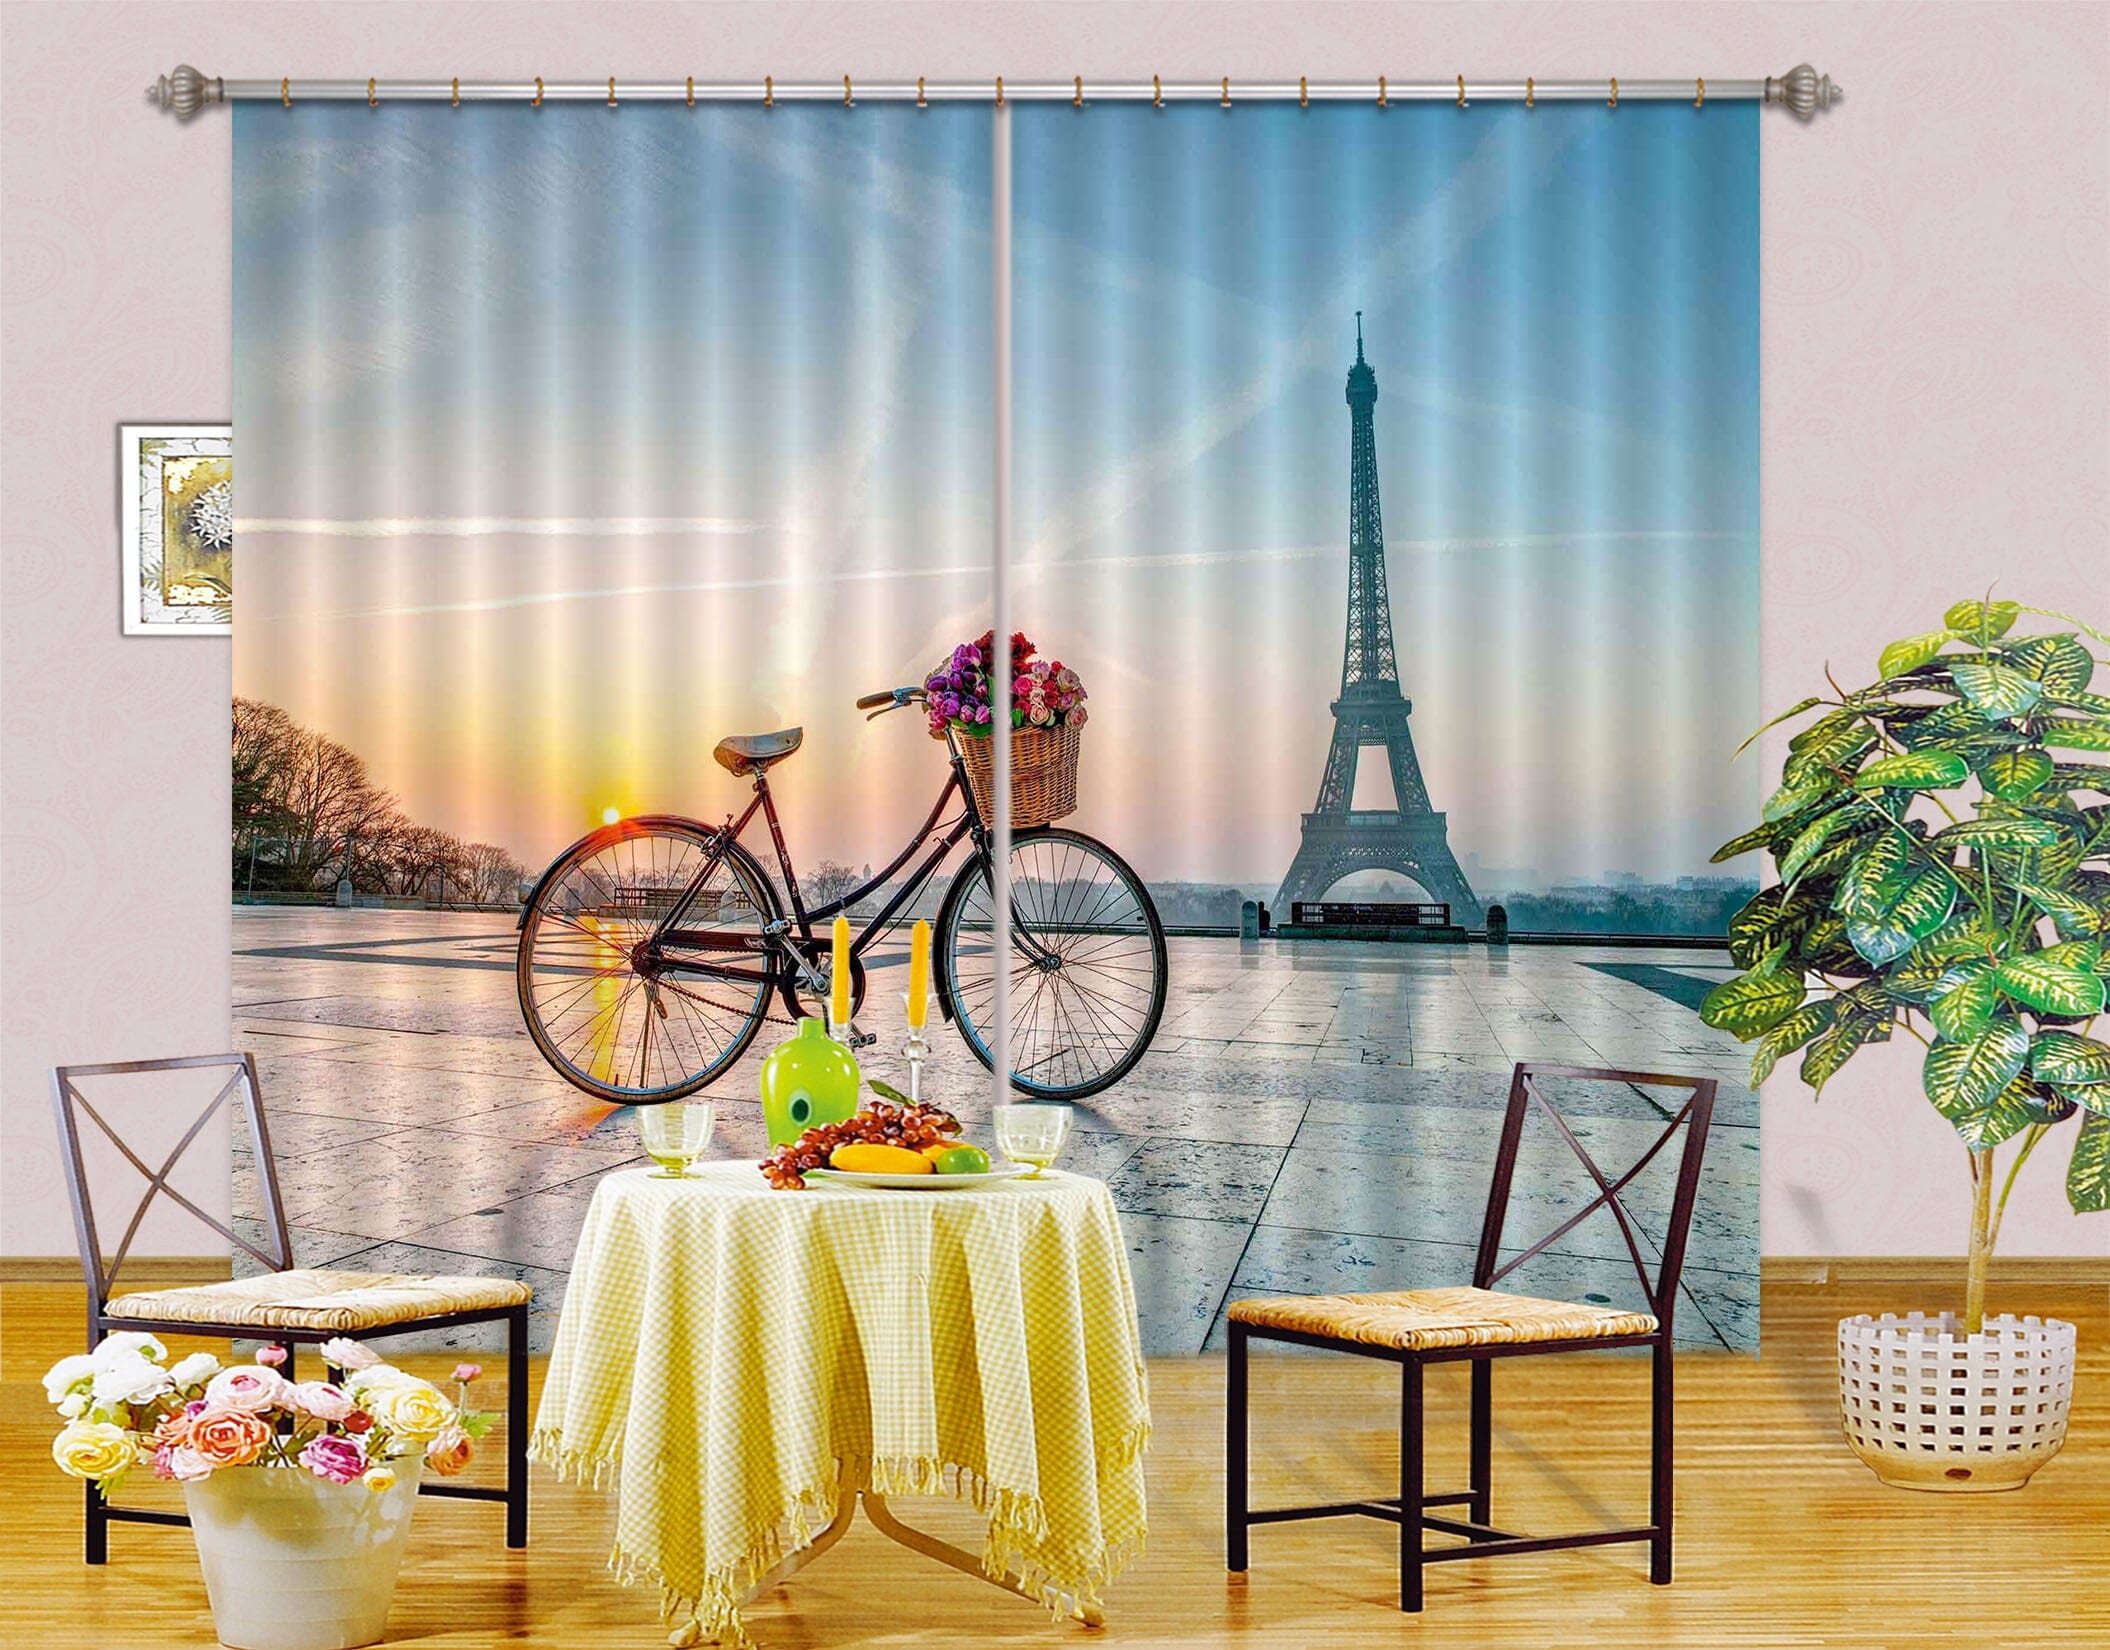 3D Eiffel Tower 004 Assaf Frank Curtain Curtains Drapes Curtains AJ Creativity Home 